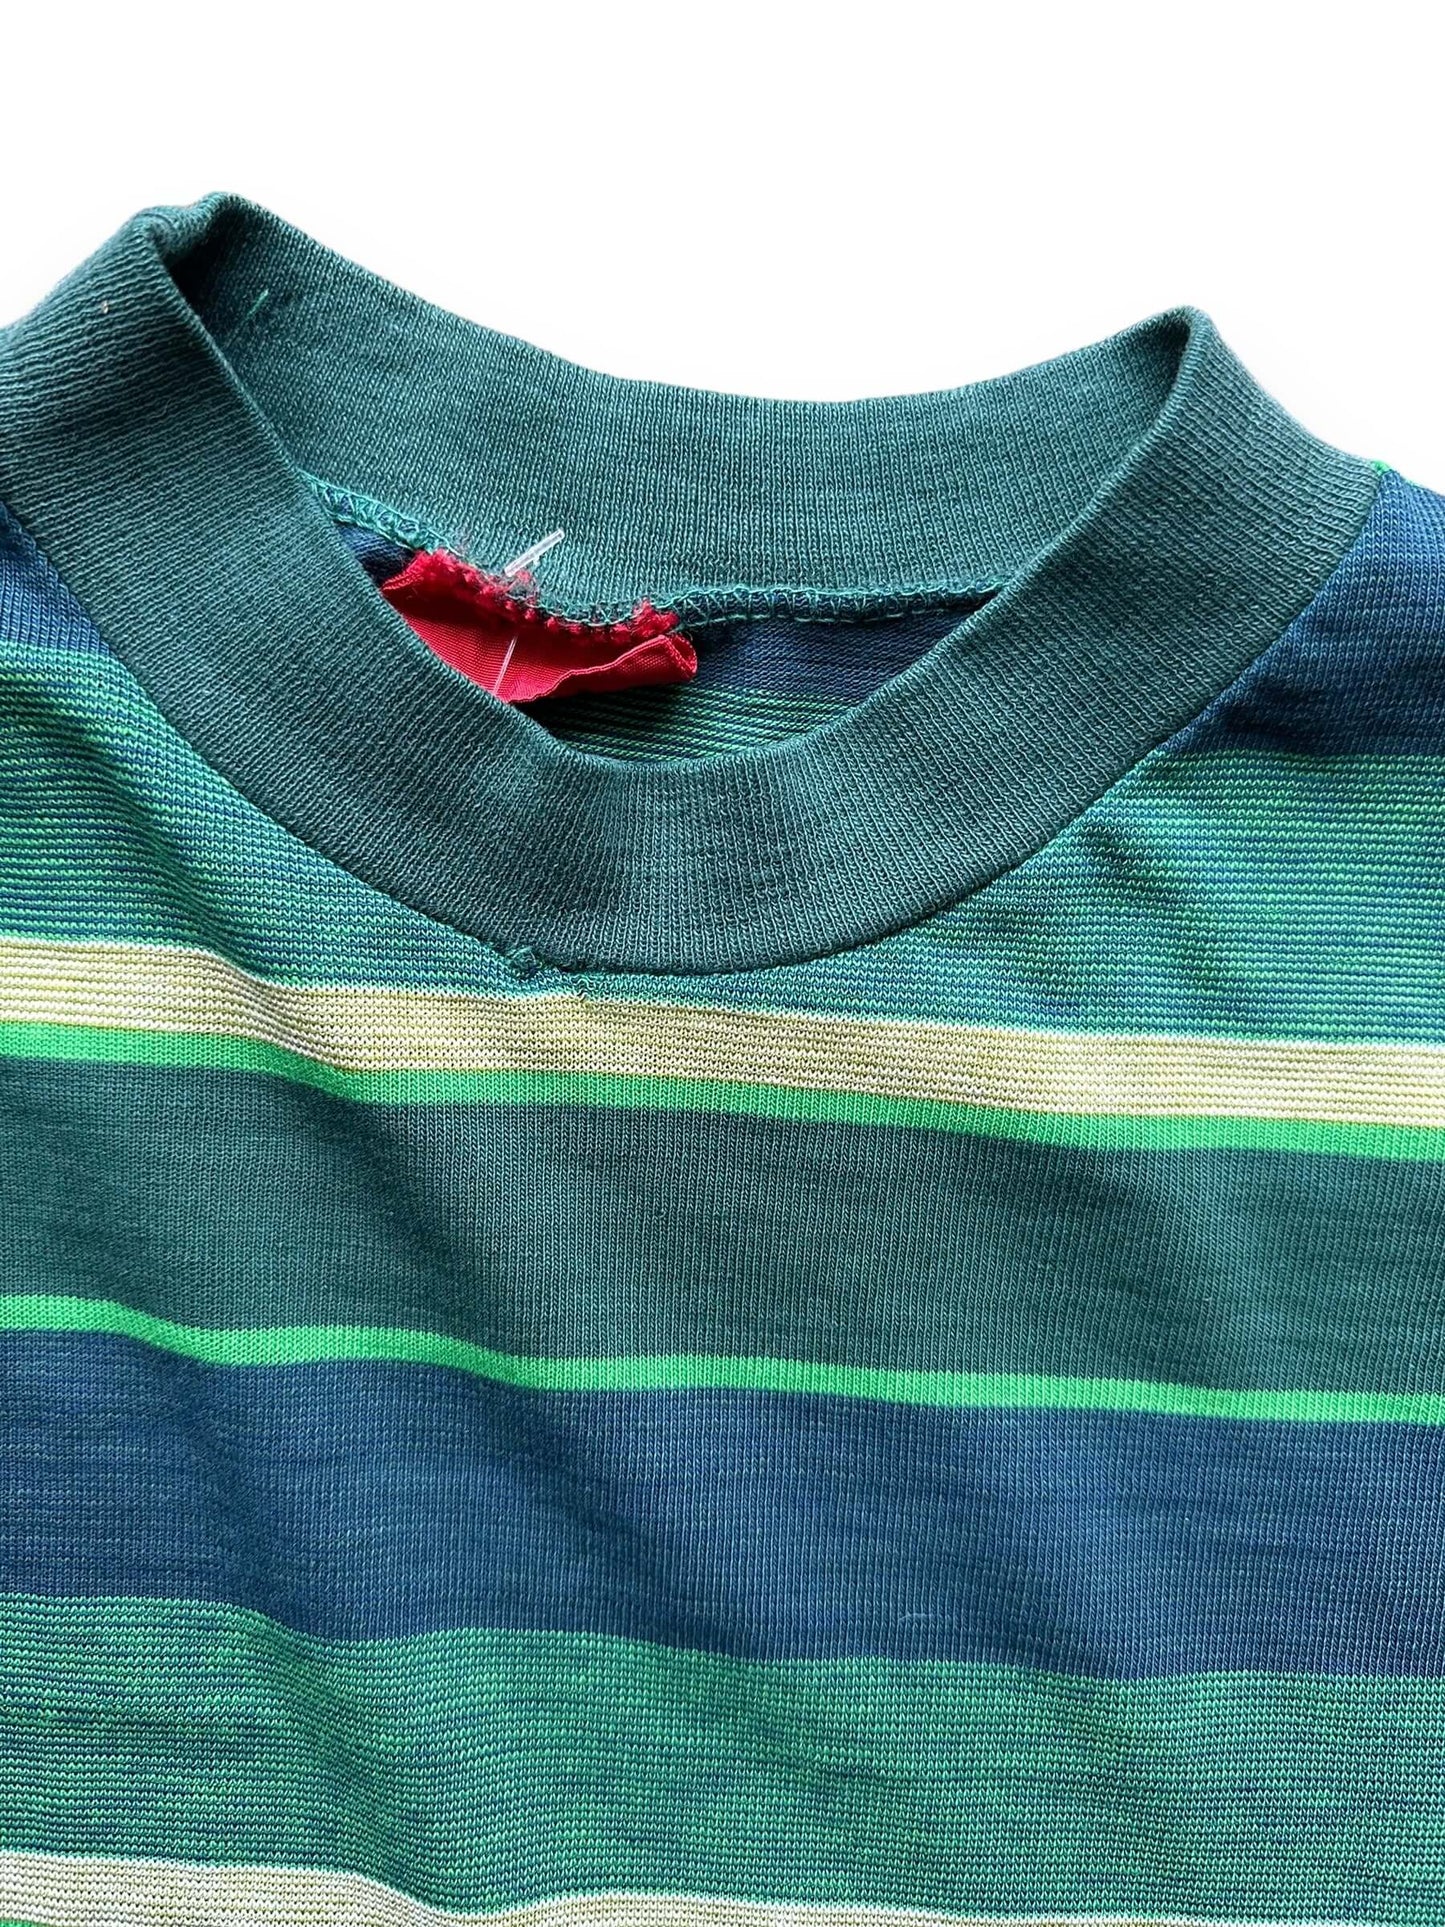 Tag View of Vintage Surfer Striped Shirt SZ L | Barn Owl Vintage Seattle